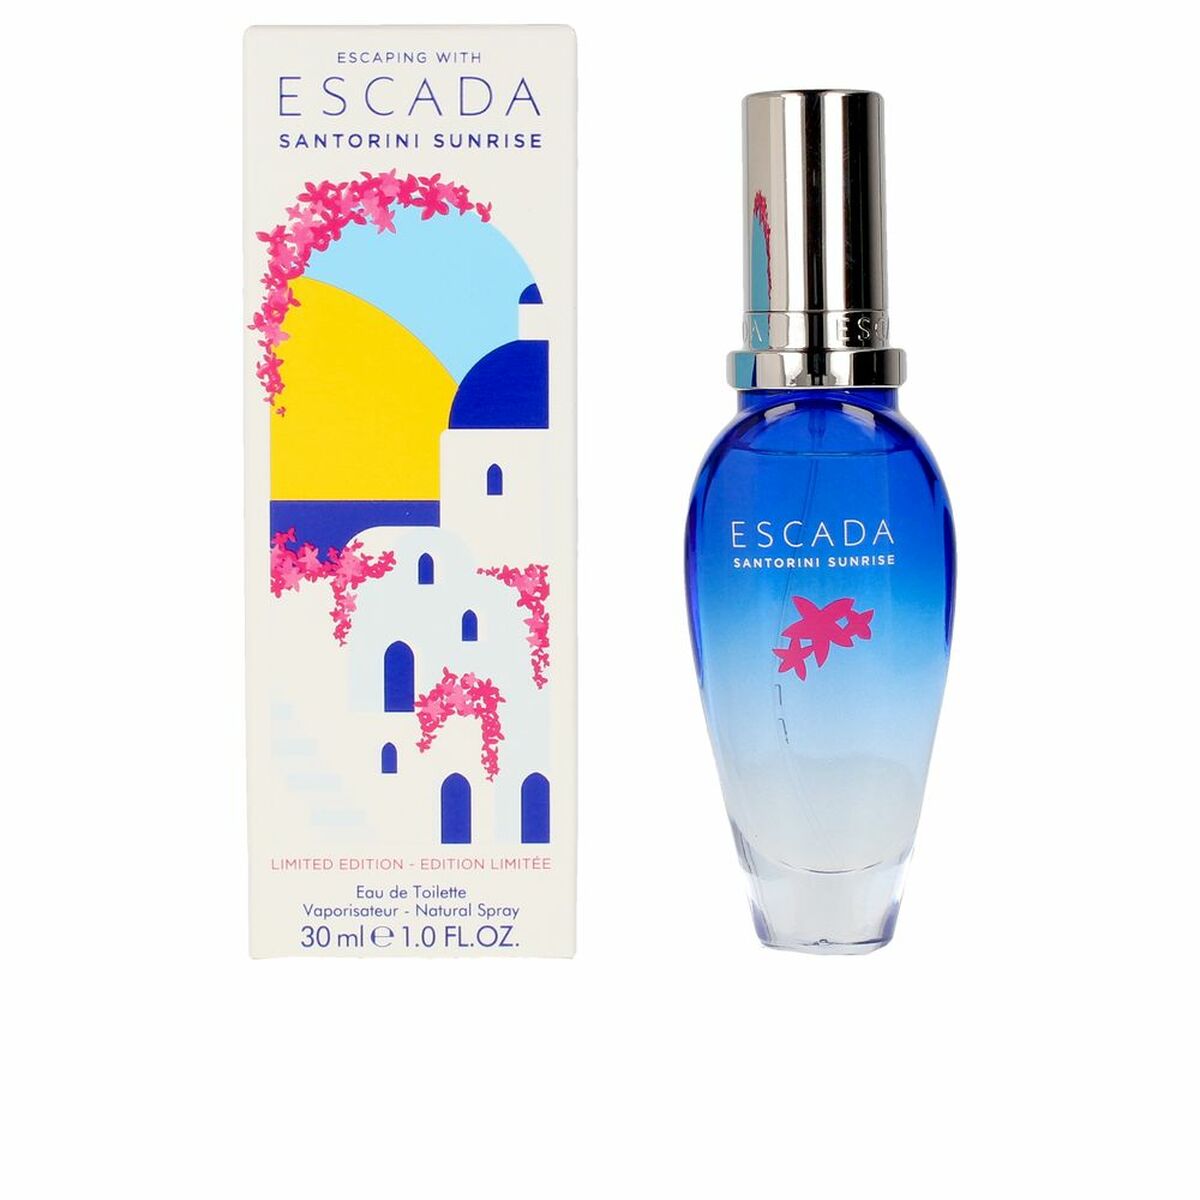 Perfume Women Escada EDT Limited Edition Santorini Sunrise 30 ml